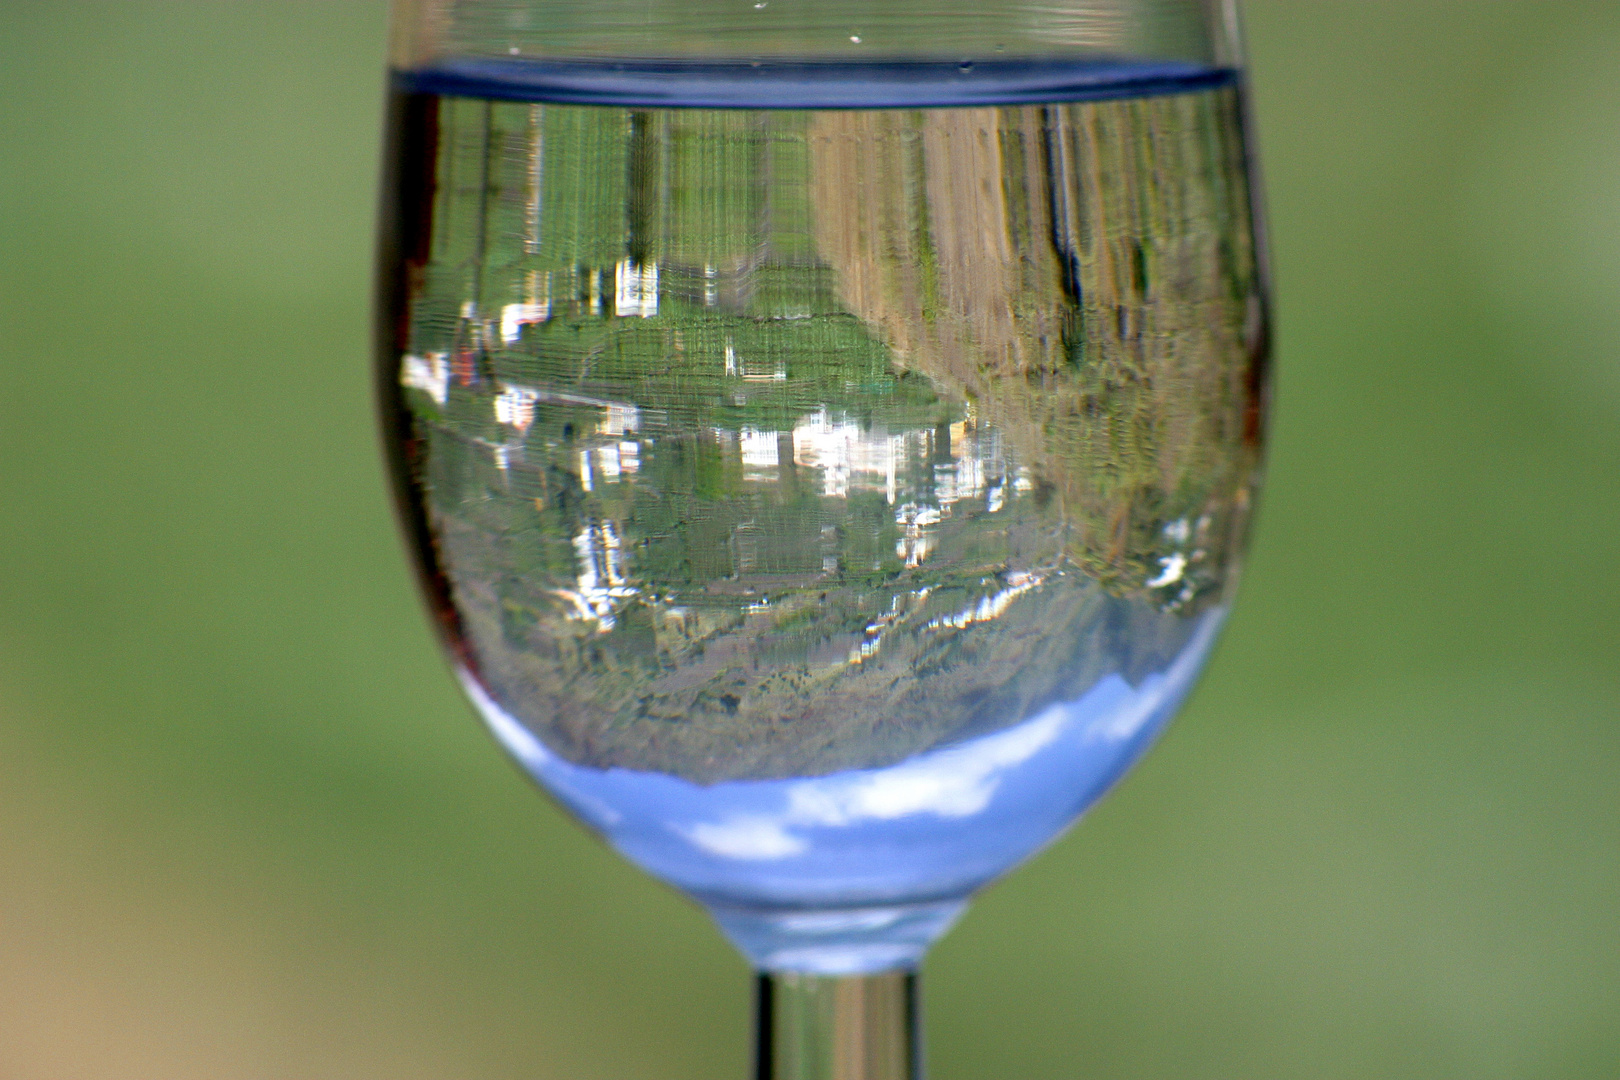 Gomera: "Hermigua - in wine glass"